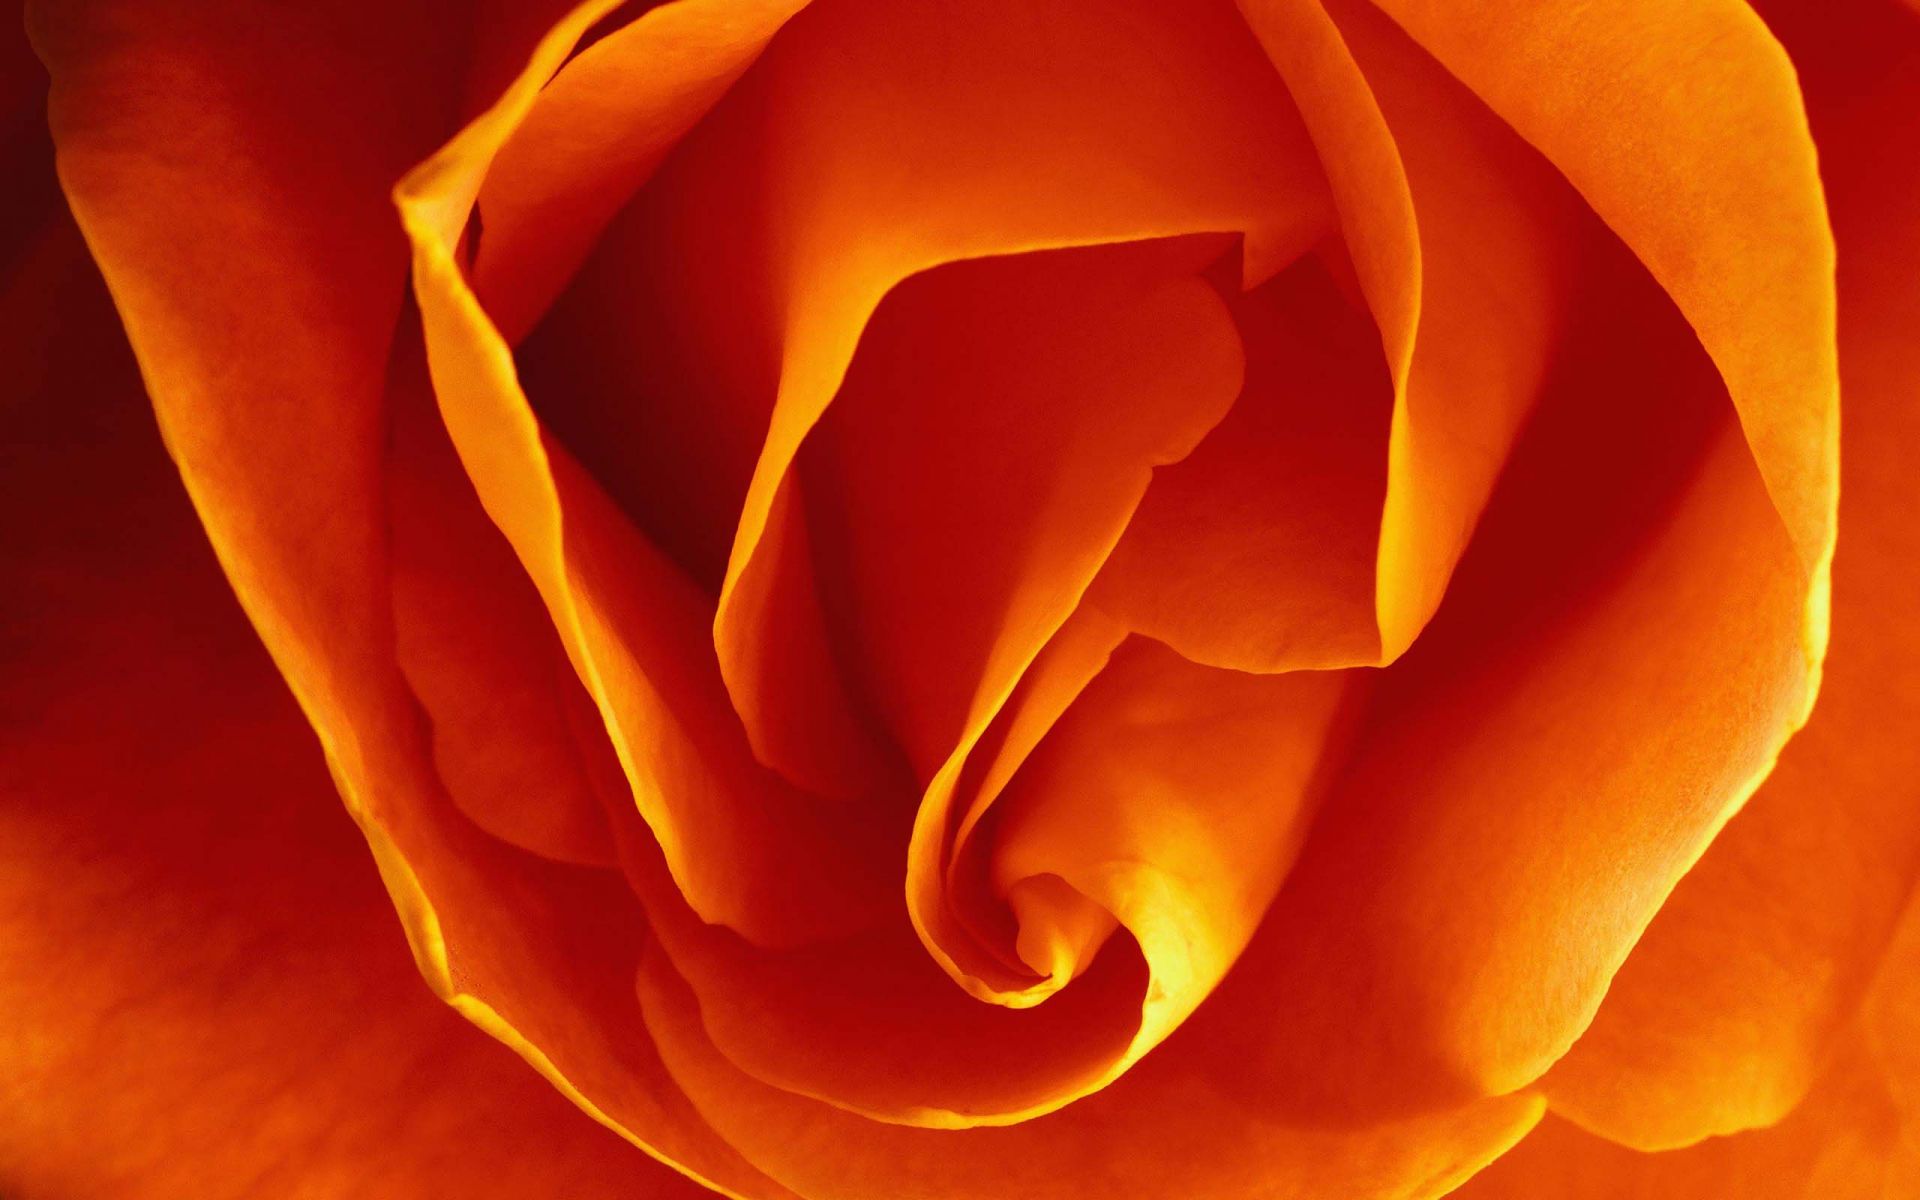 Orange Rose Closeup | HD Flowers Wallpapers for Mobile and Desktop